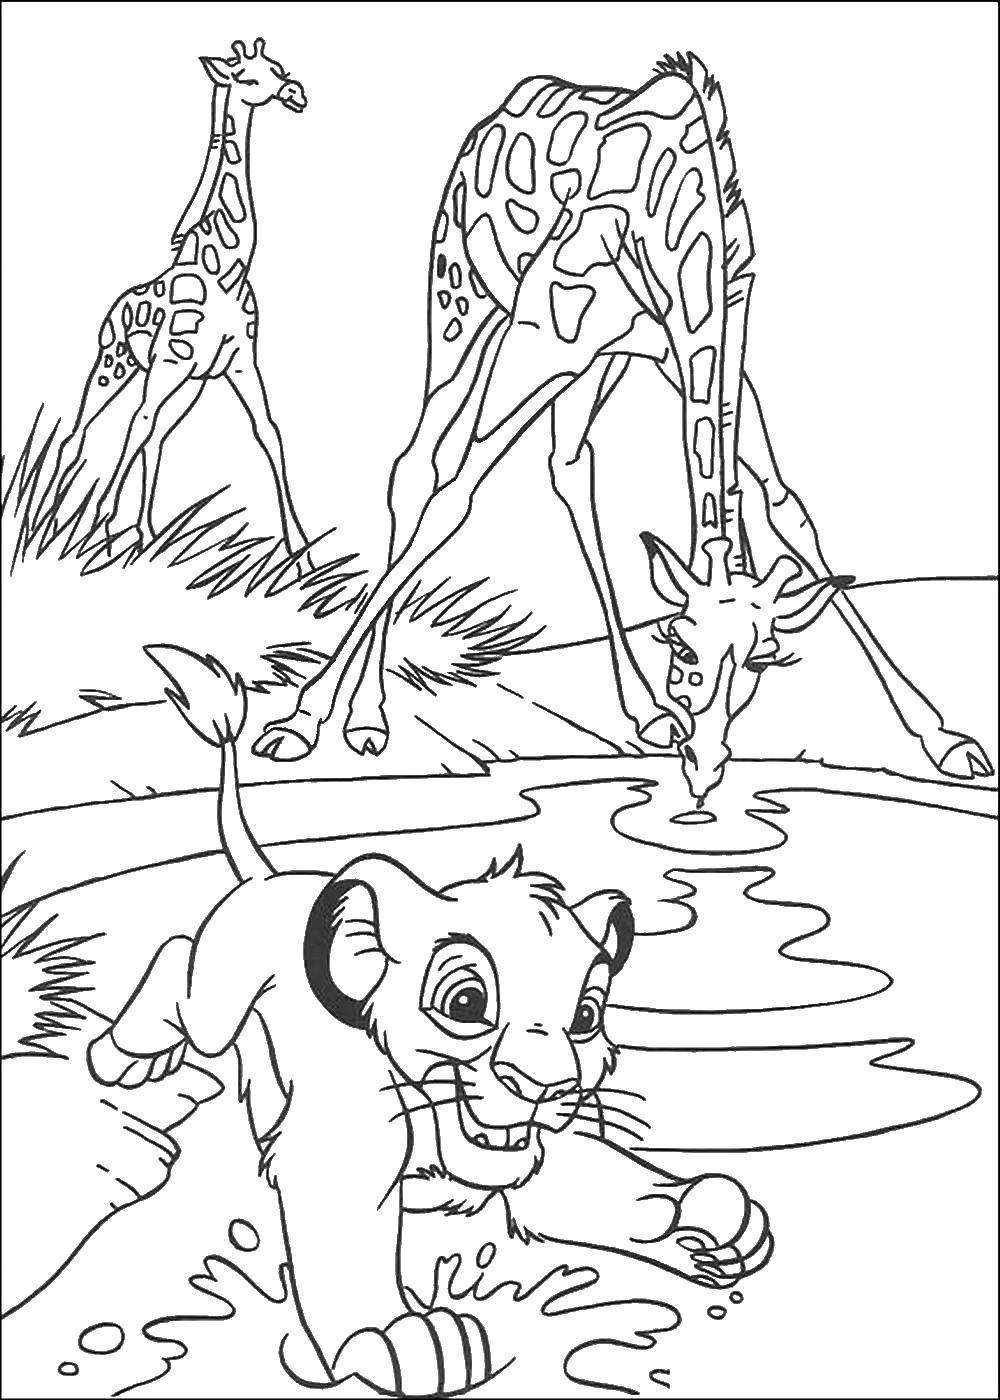 Coloring Simba and giraffes. Category cartoons. Tags:  Lion king cartoon, lion cub, Simba, giraffes.